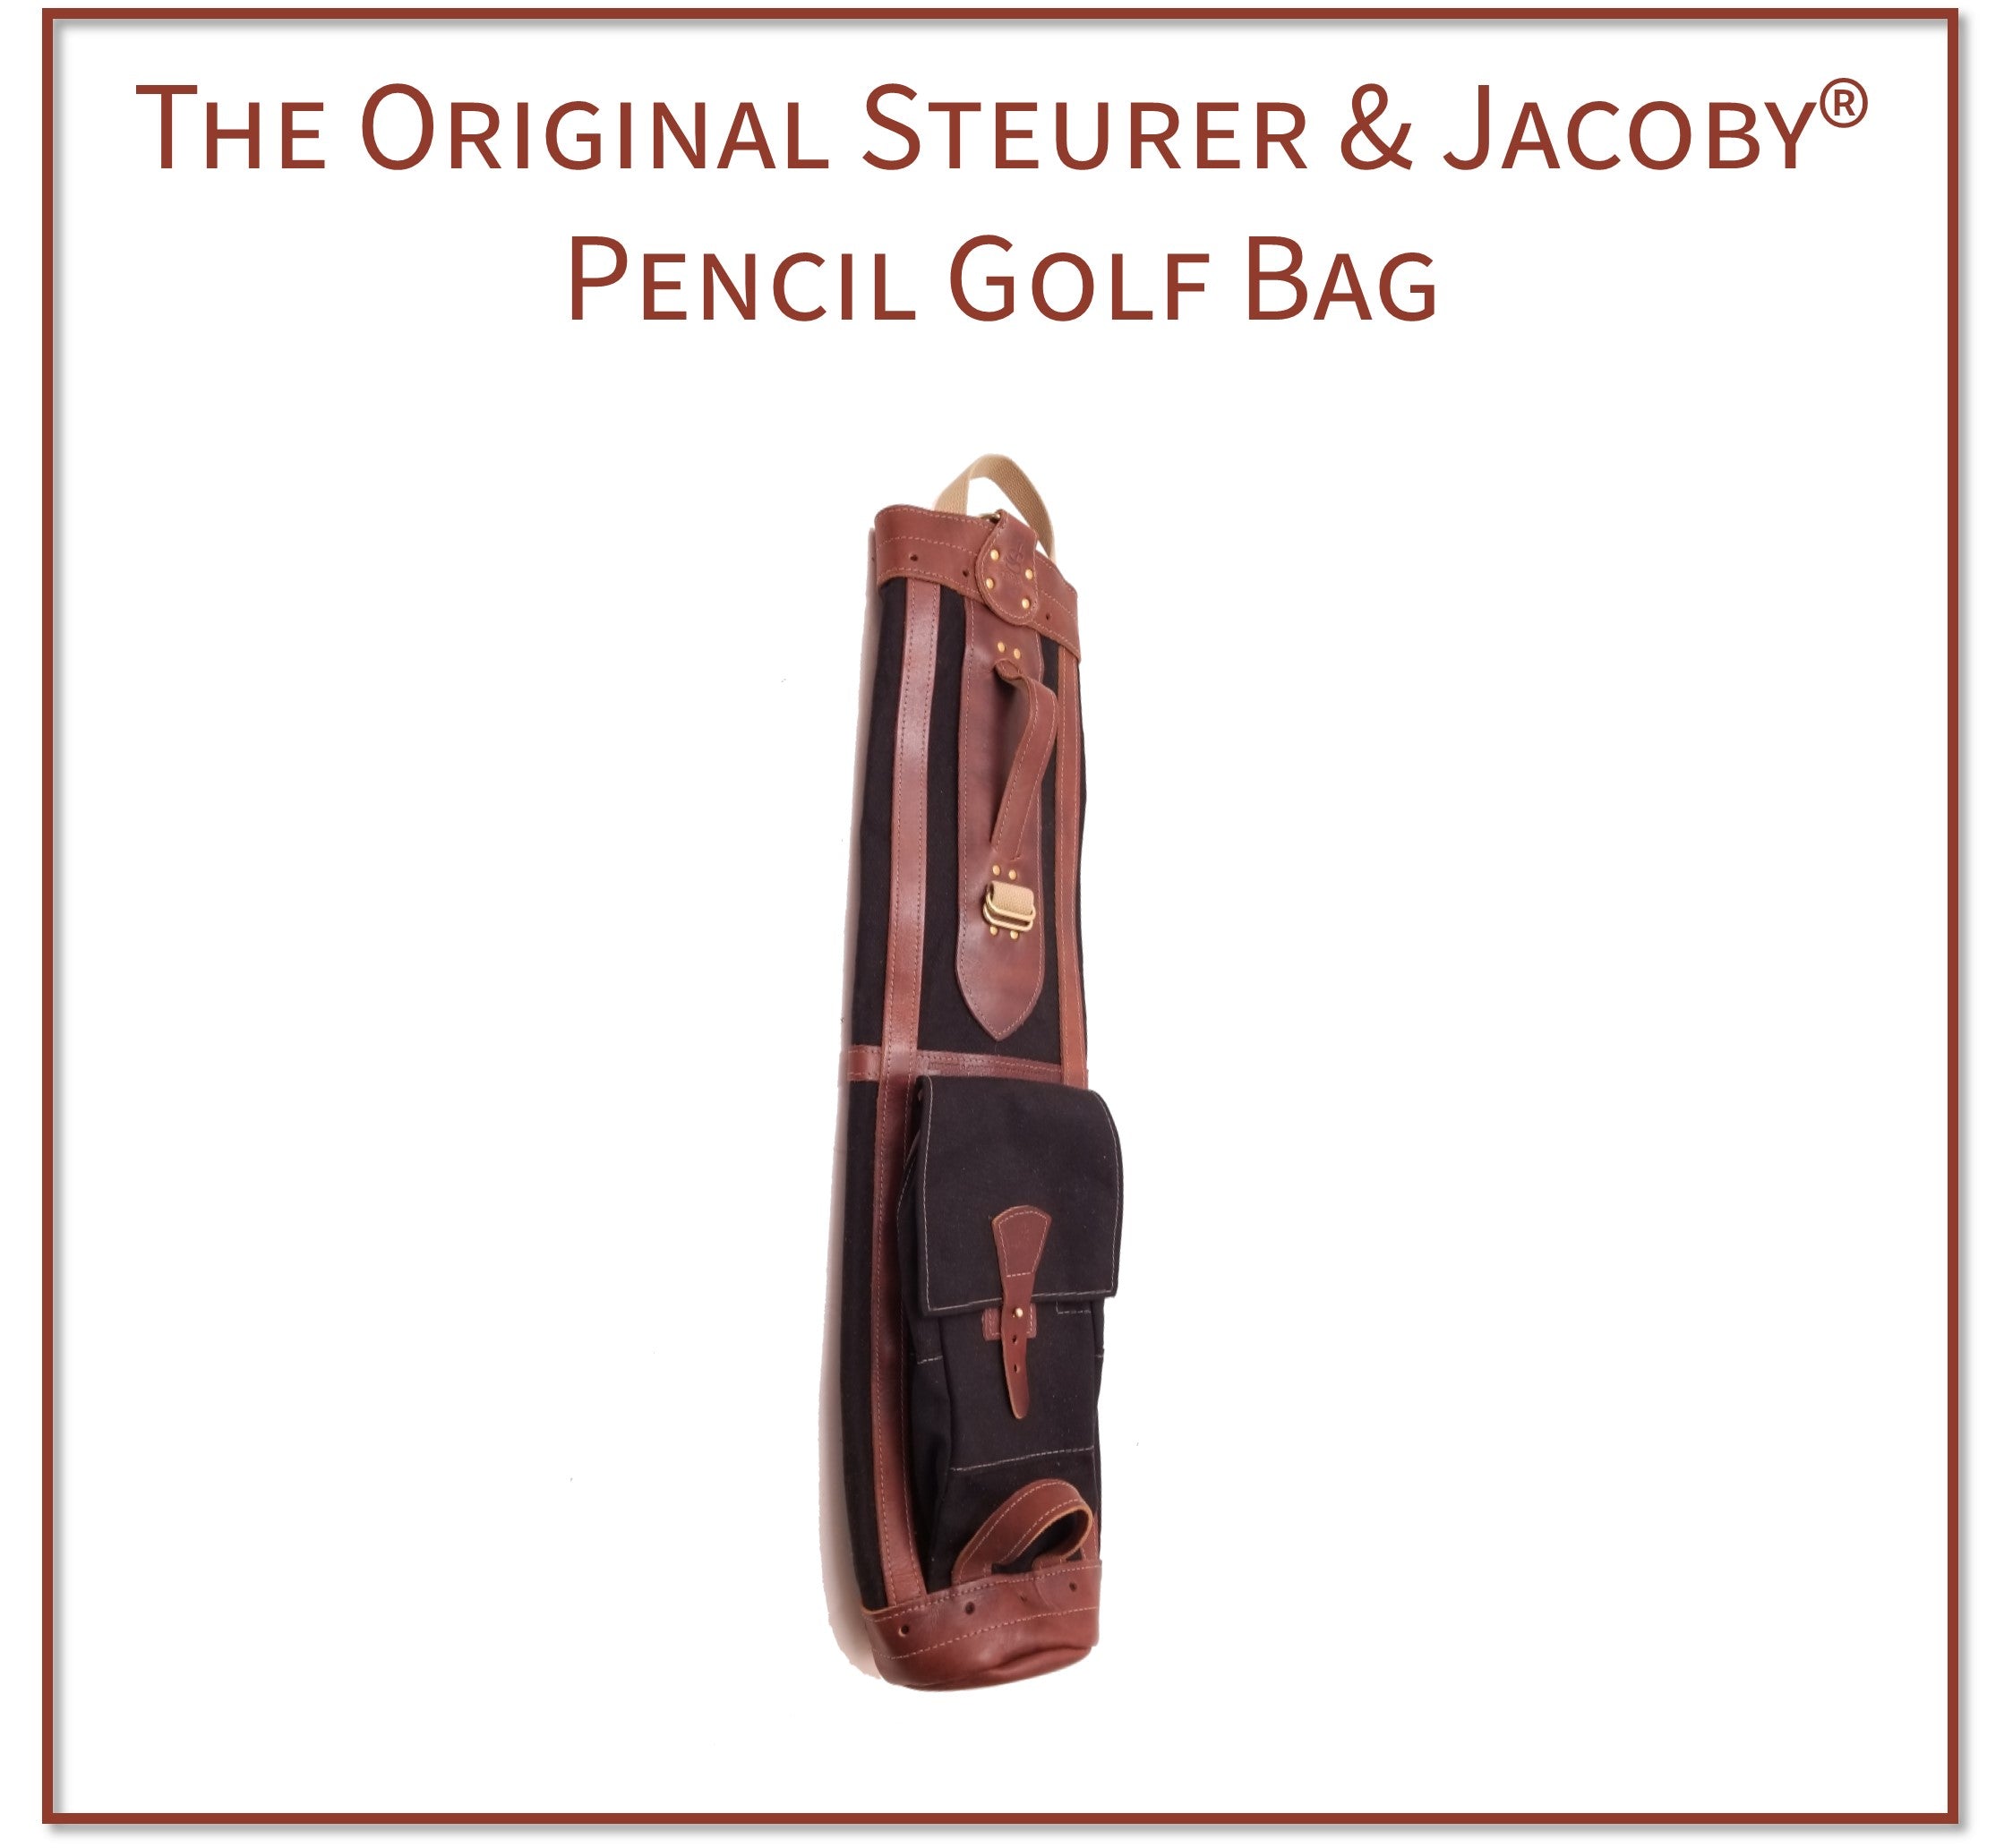 The Original Steurer & Jacoby® Pencil Golf Bag